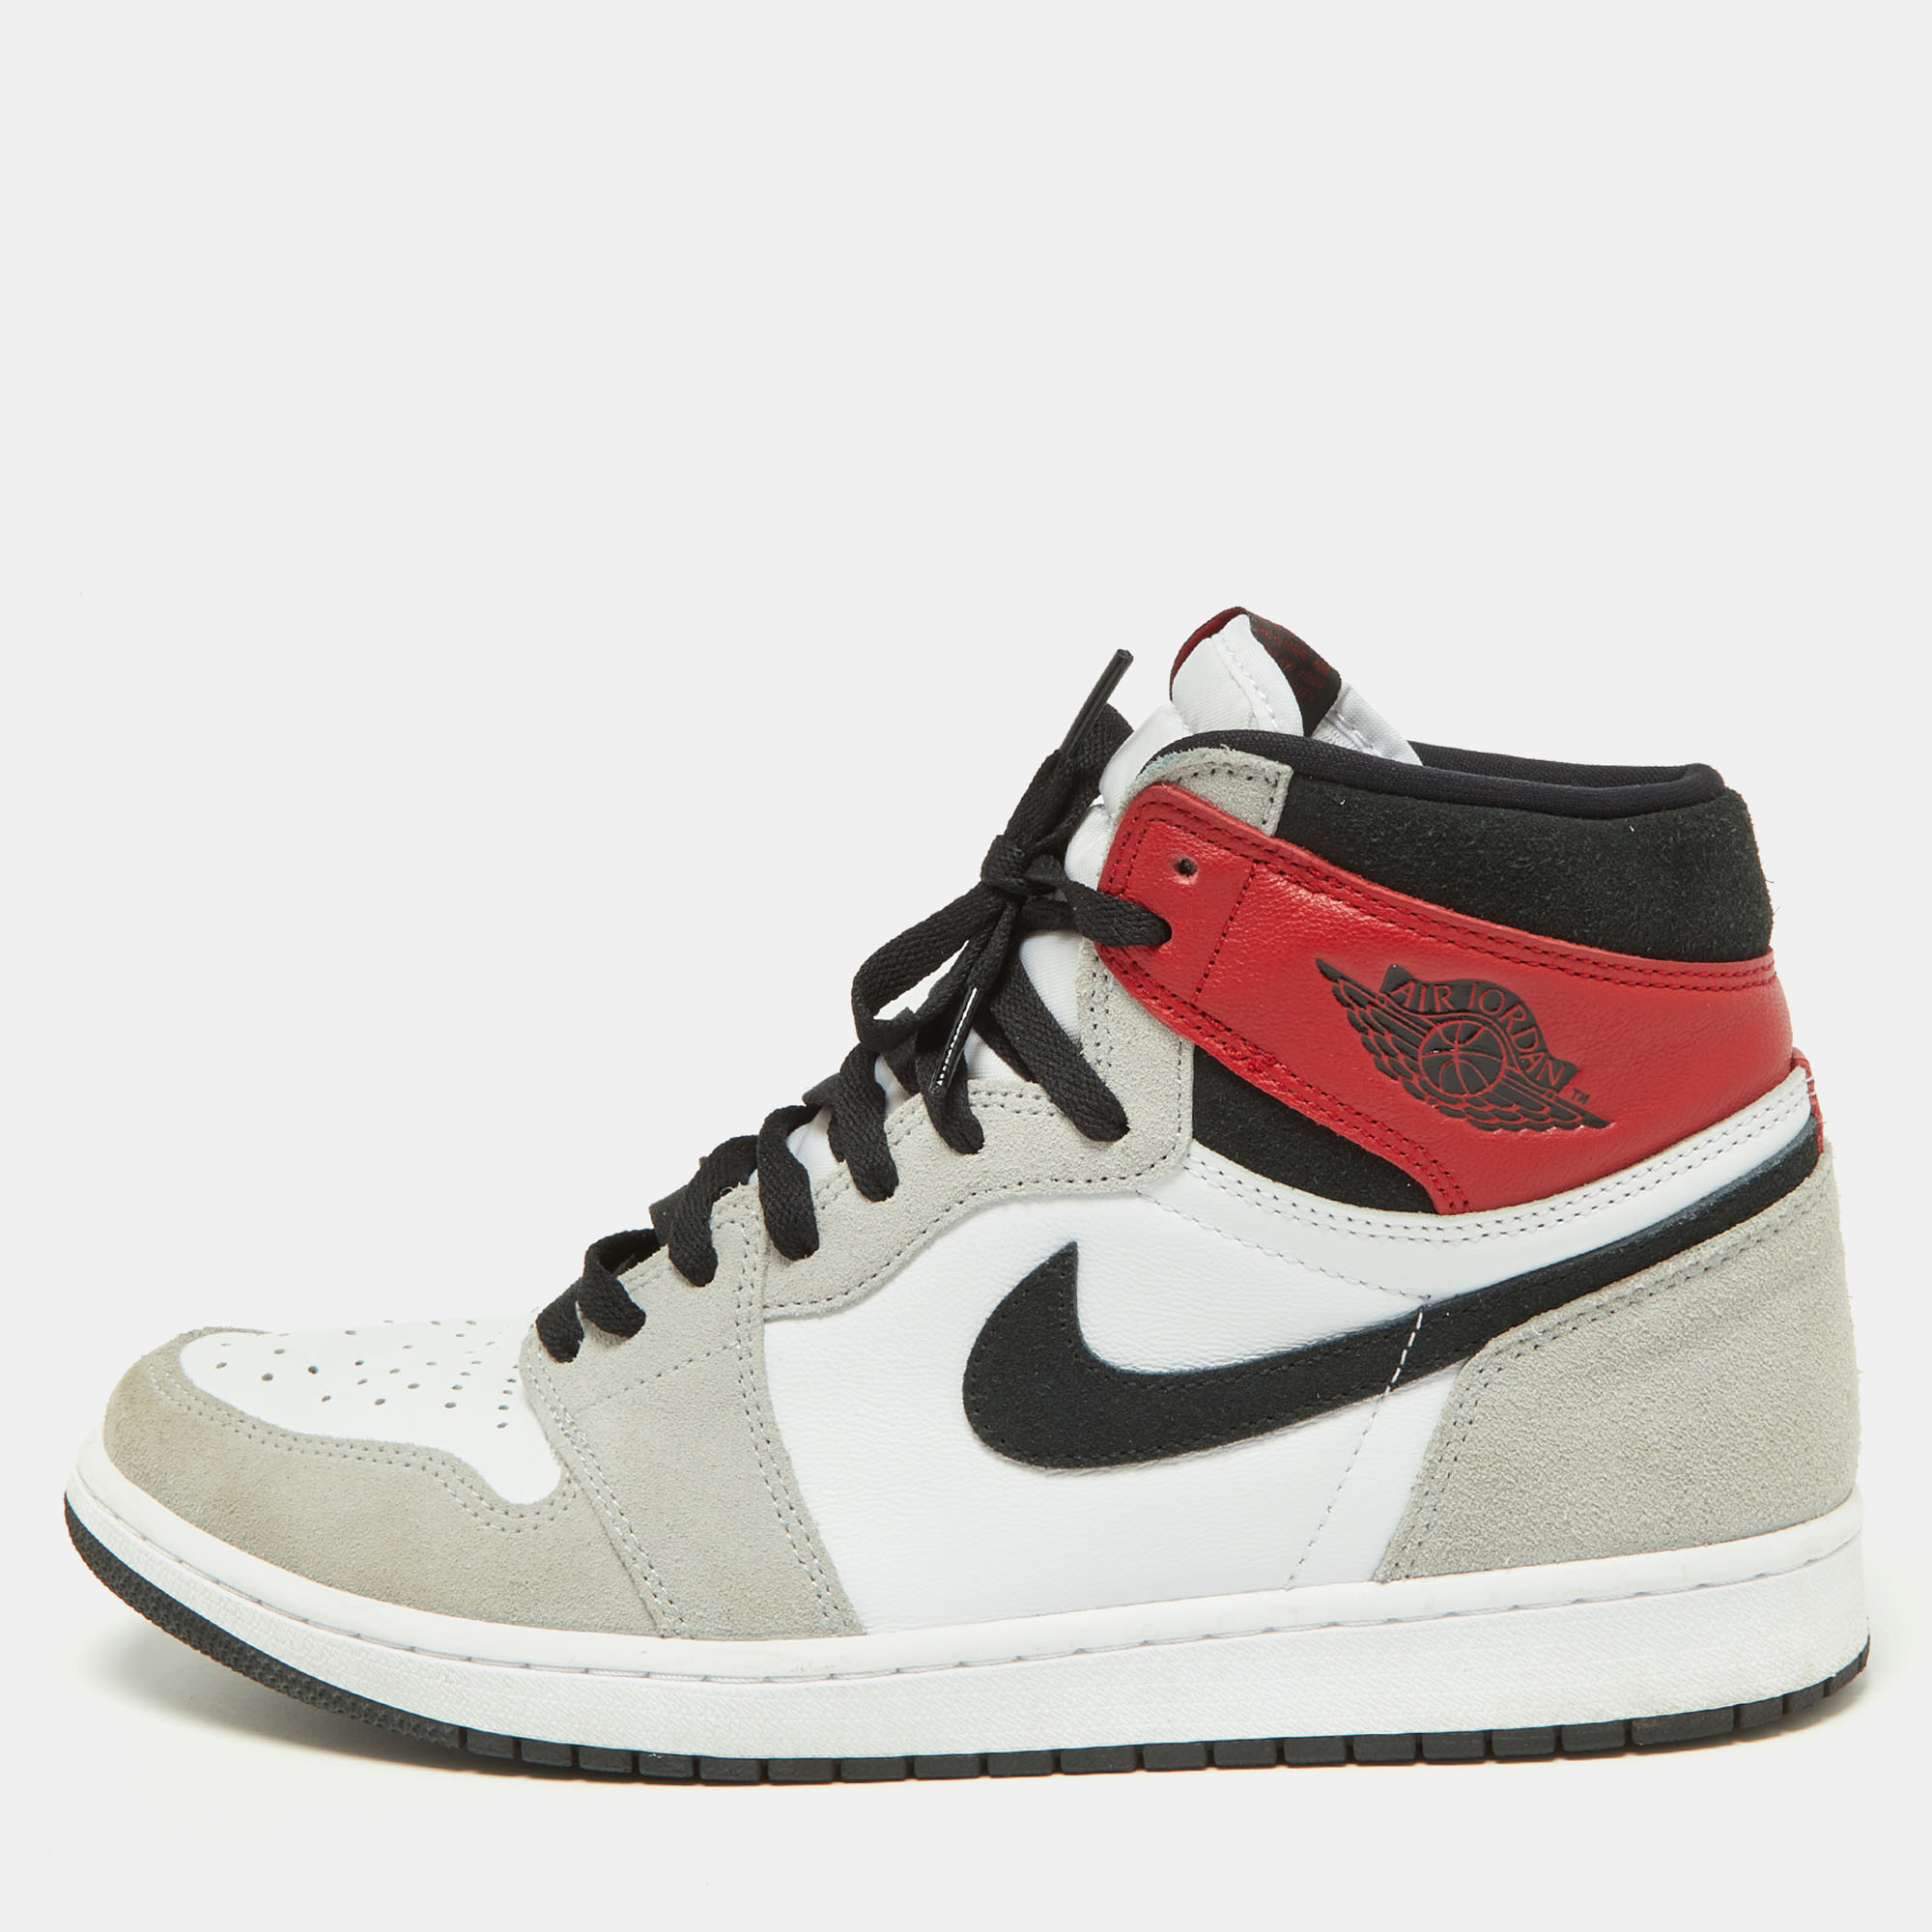 Air Jordan Tricolor Leather And Suede Jordan1 High Light Smoke Grey Sneakers Size 46